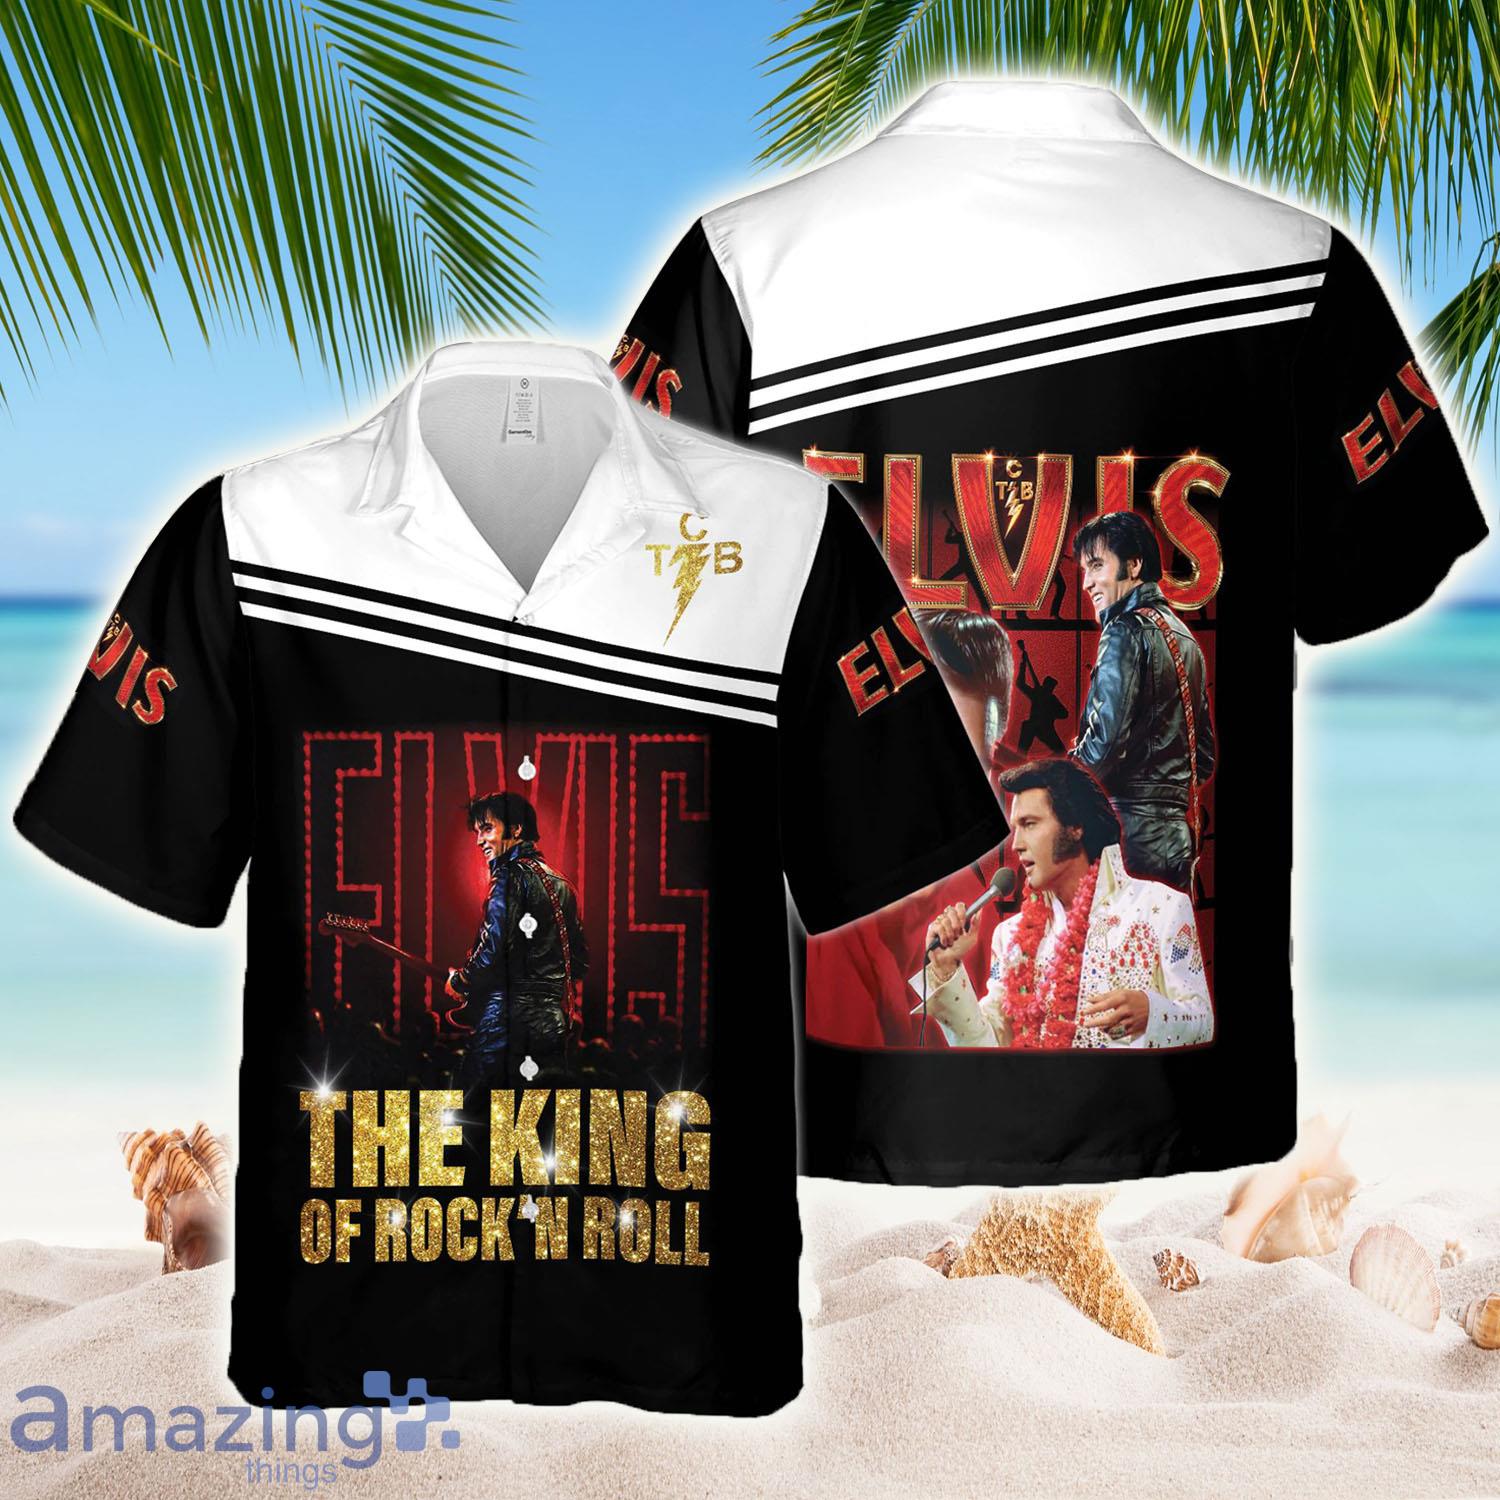 Elvis Presley The King Of Rock’n Roll Hawaii Shirt - Elvis Presley The King Of Rock’n Roll Hawaii Shirt